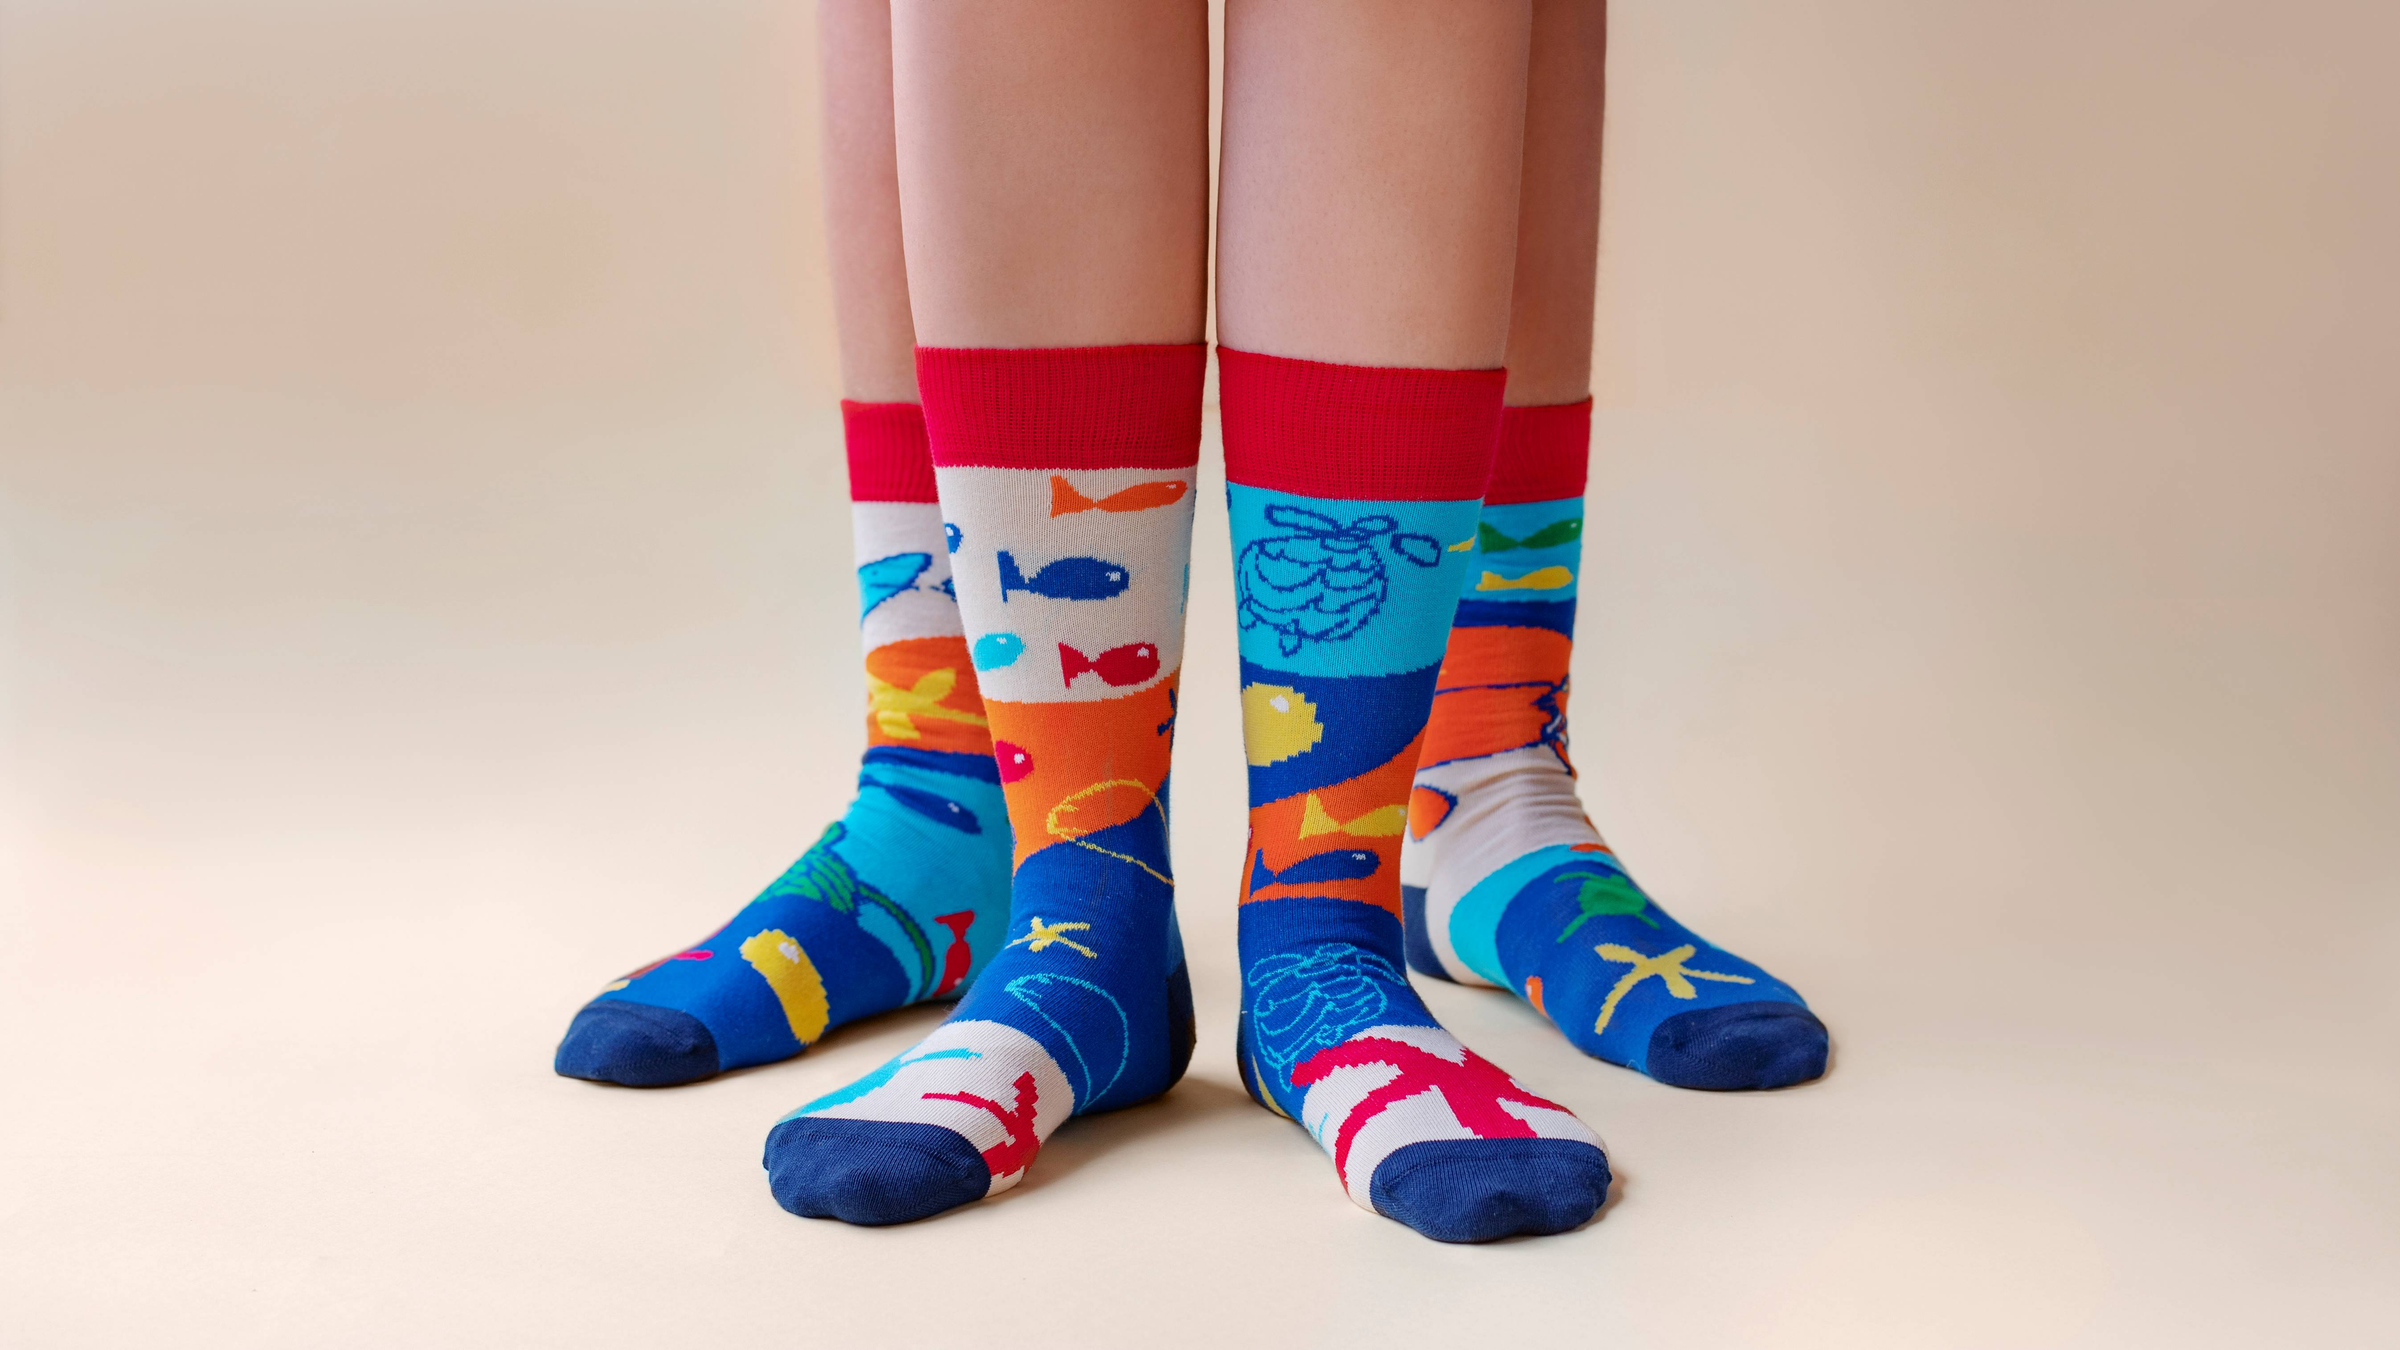 PAAR Socks Mismatched Socks Collection